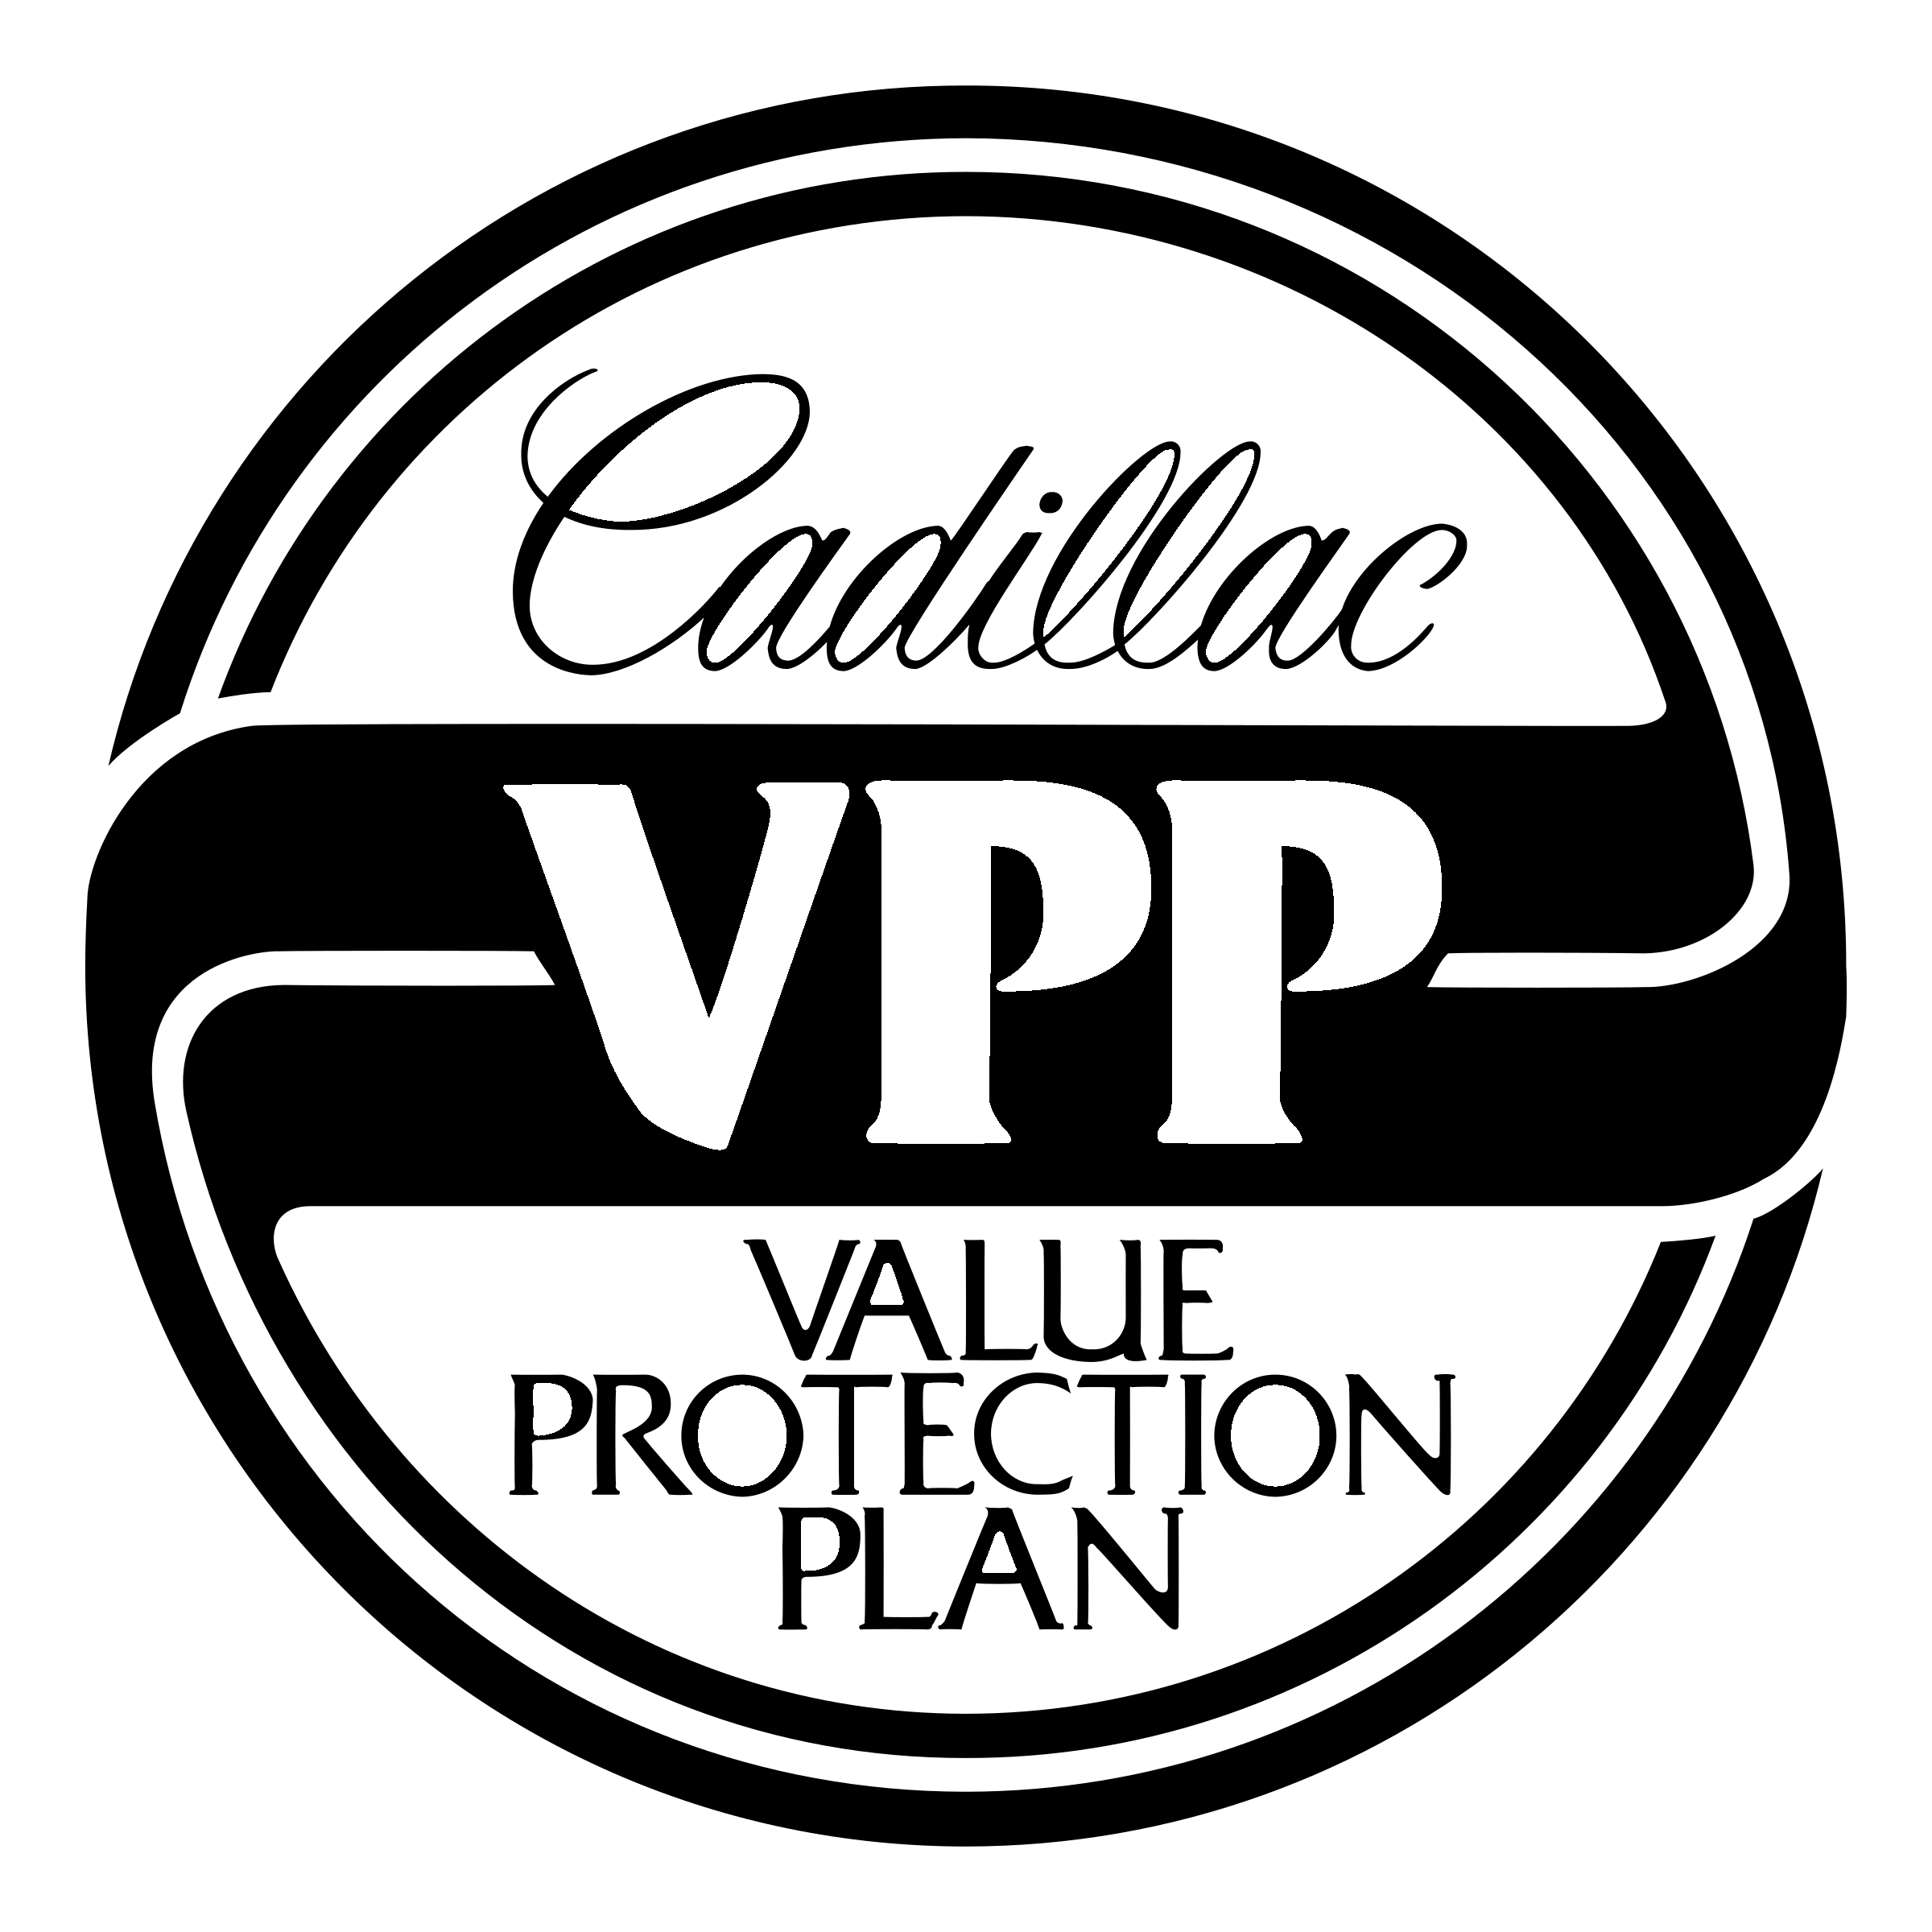 VPP Logo - Cadillac VPP Logo PNG Transparent & SVG Vector - Freebie Supply